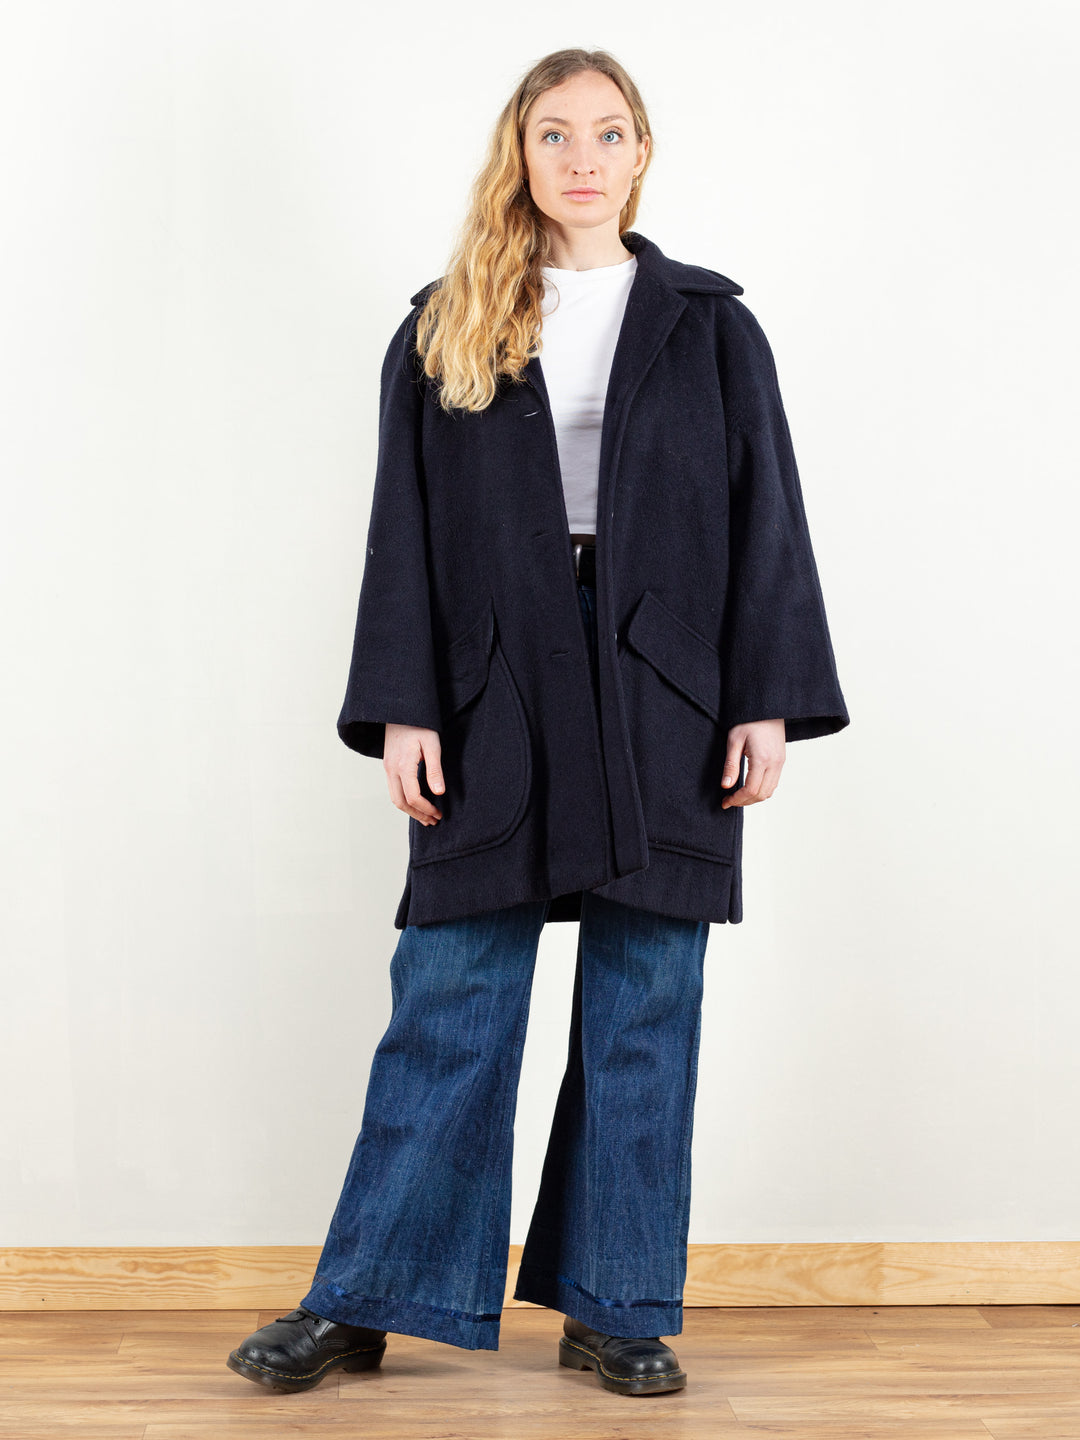 Blue Wool Coat women vintage 80s winter coat wool blend short coat mod outerwear bold winter coat vintage clothing size large